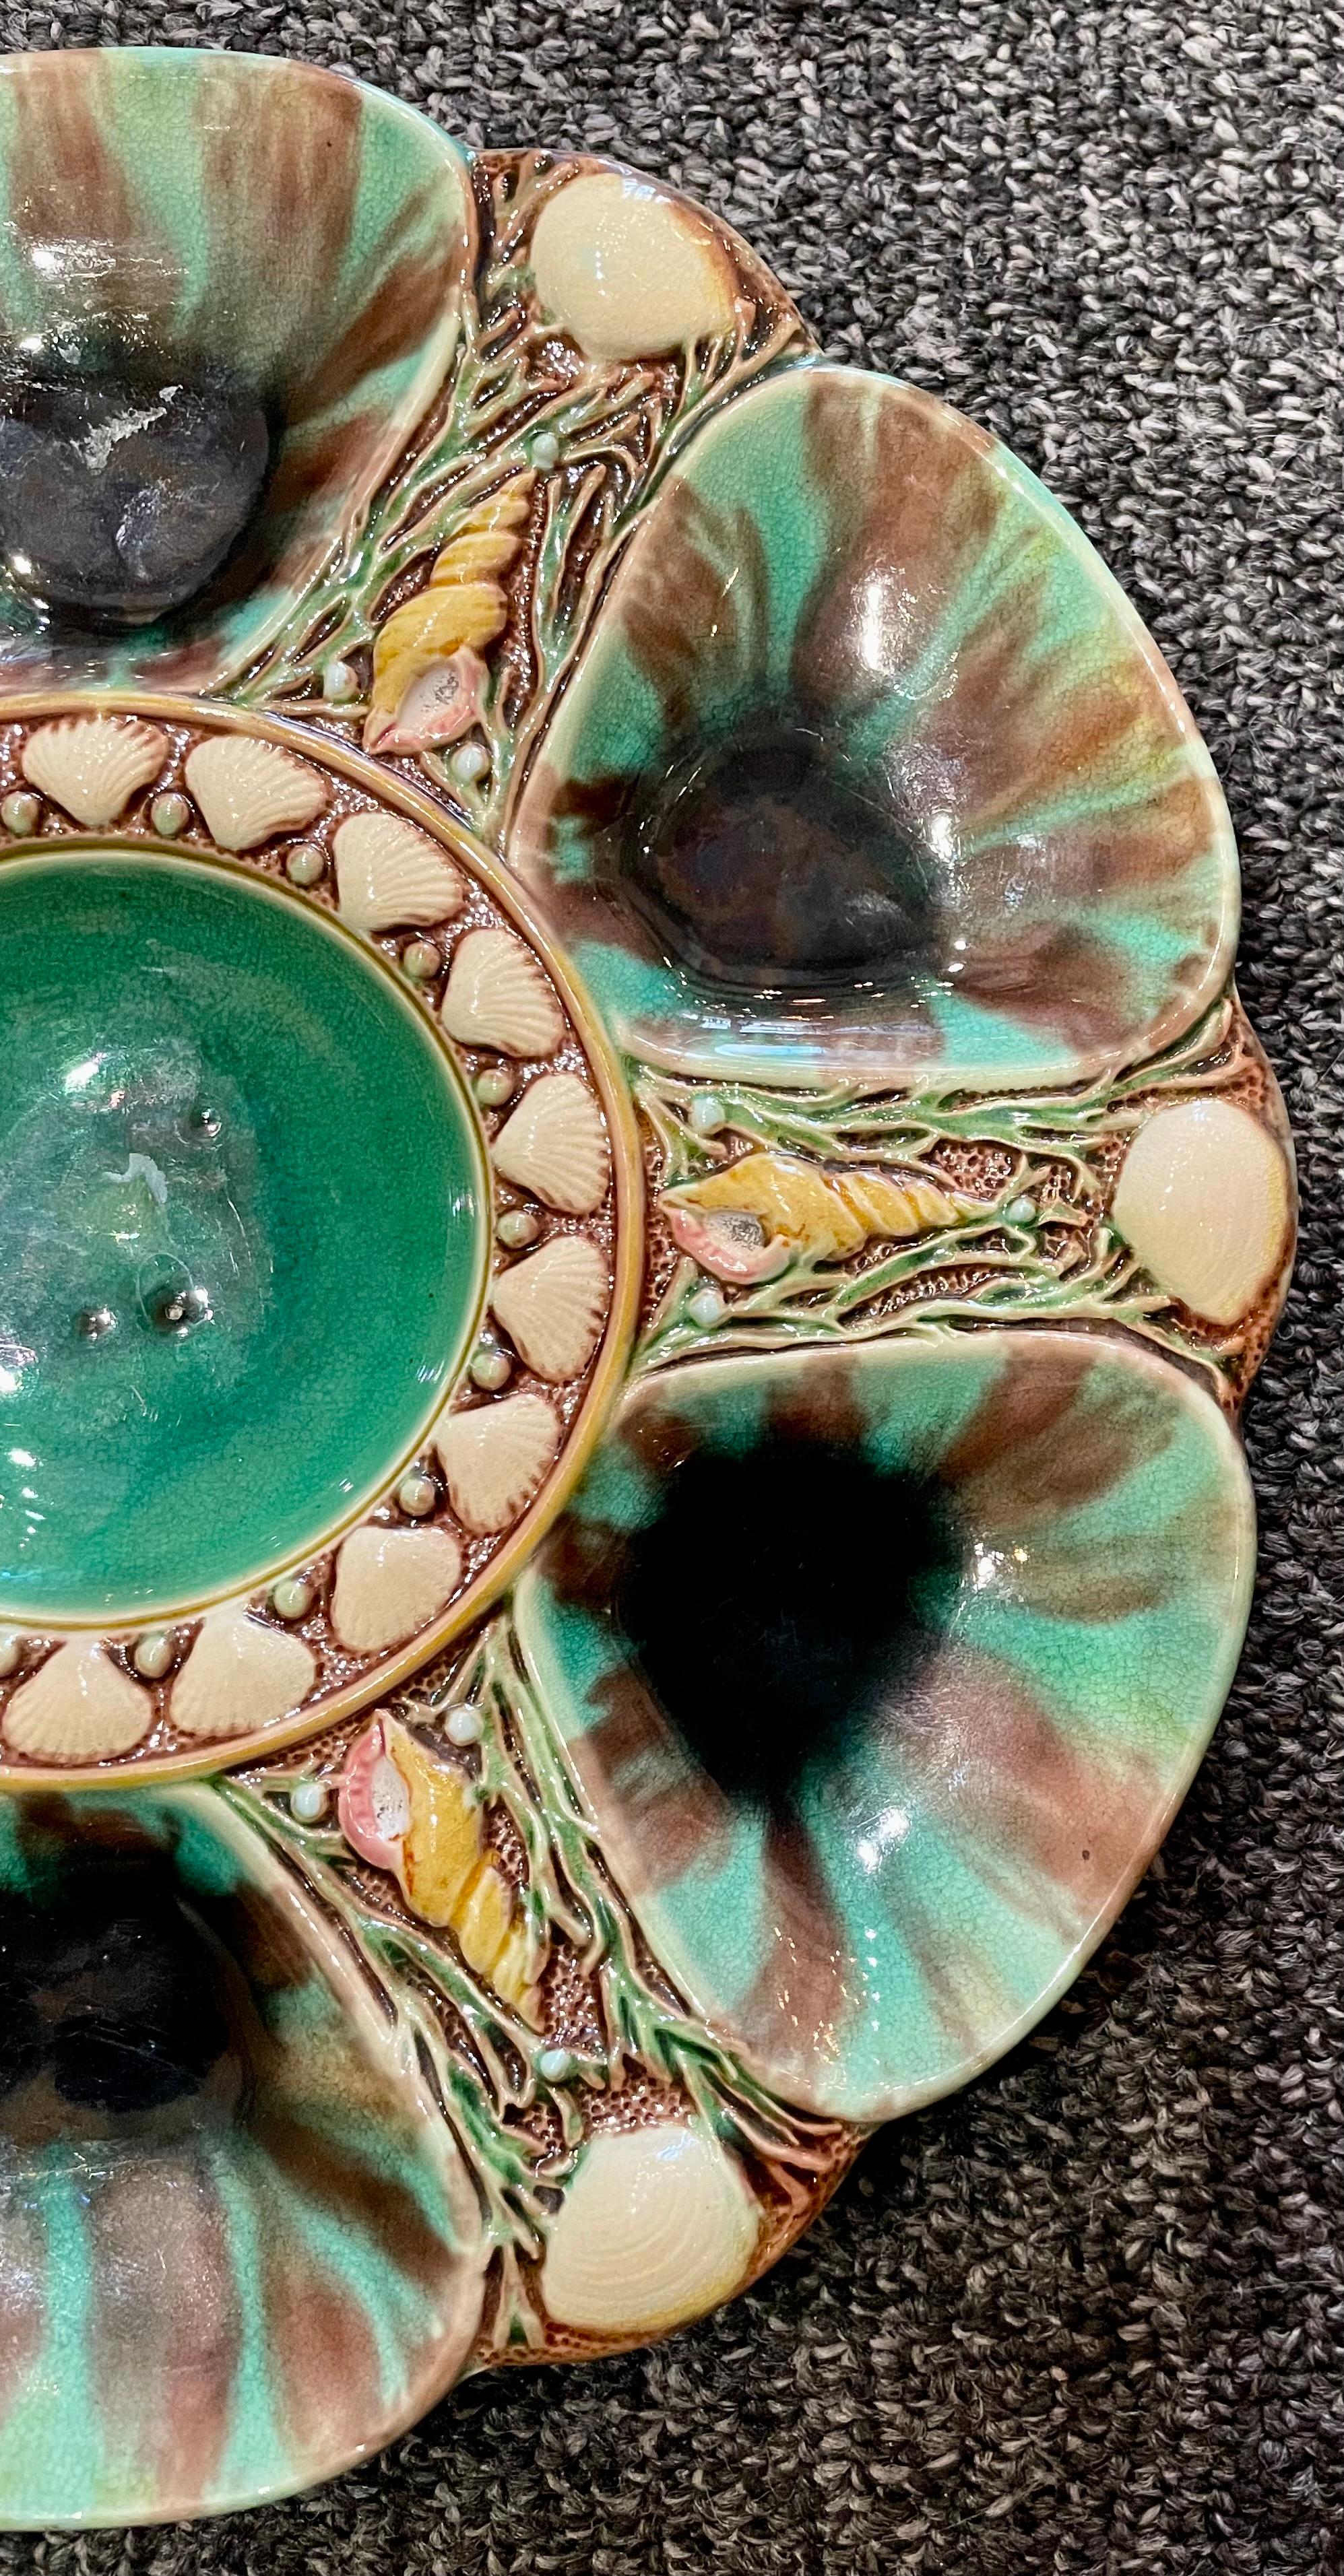 Rare Antique English Minton Majolica Malachite Green Porcelain Oyster Plate, Circa 1875.
Signed 